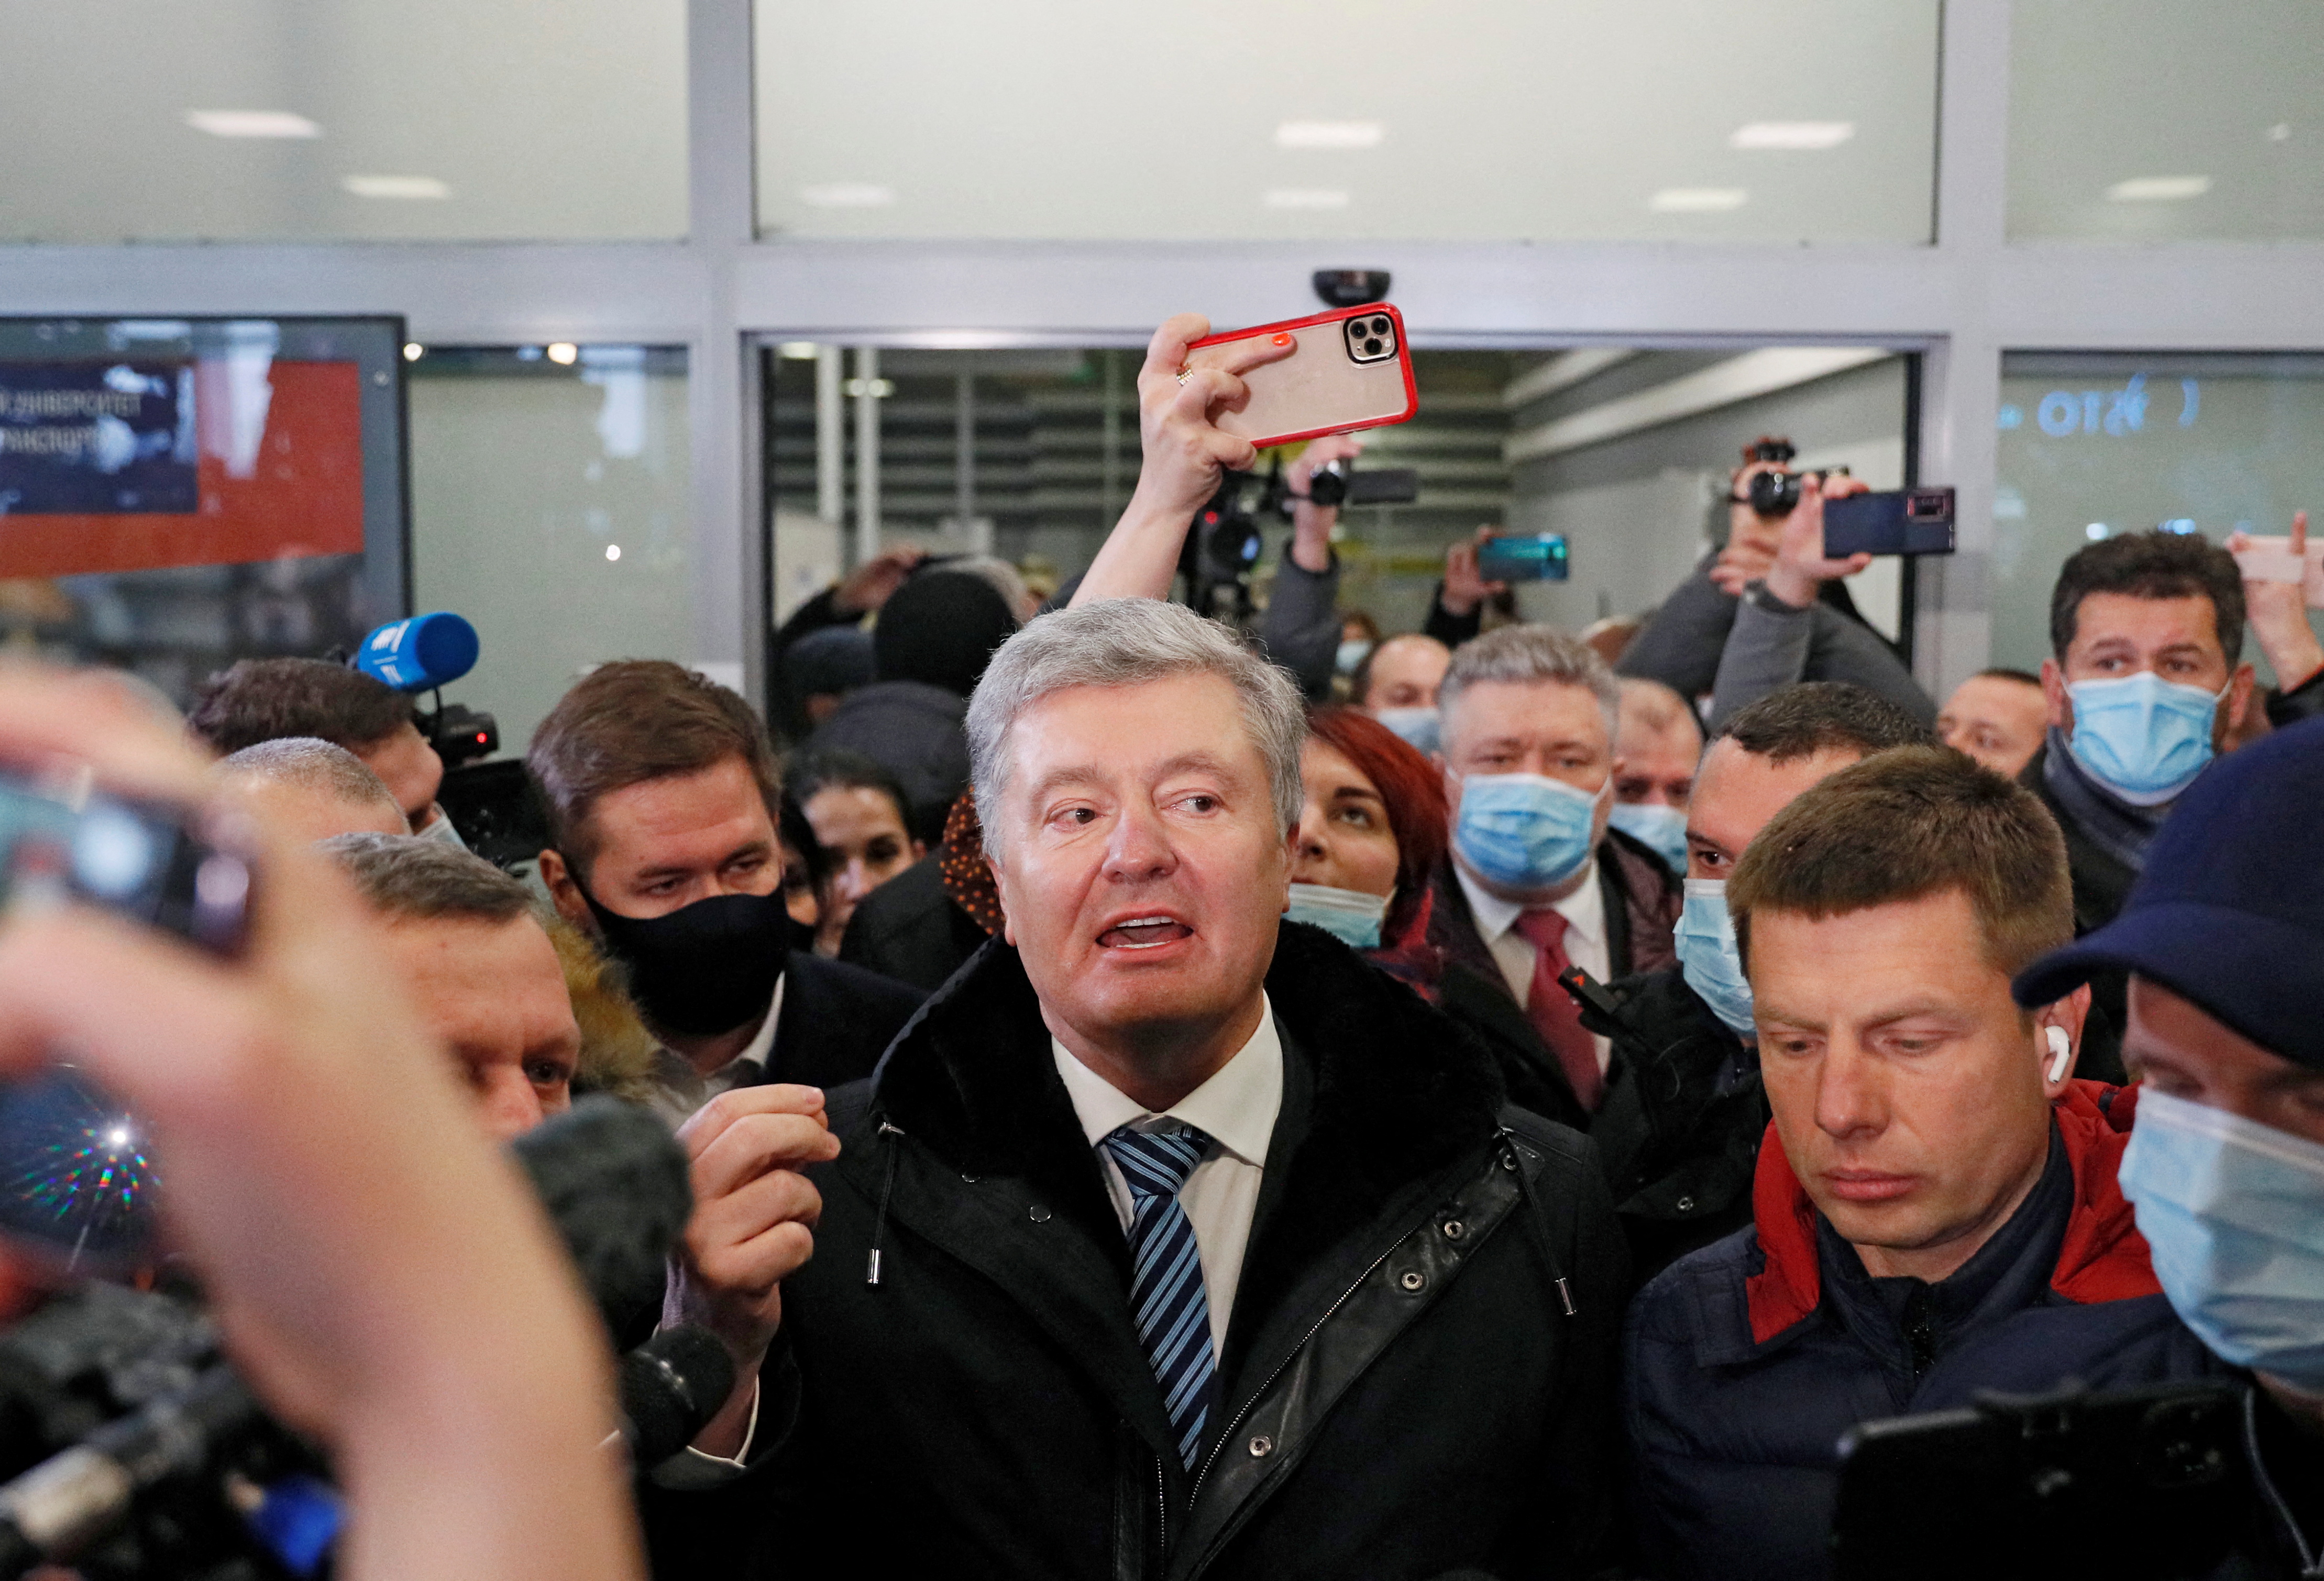 De Oekraïense voormalige president Petro Poroshenko spreekt journalisten toe bij aankomst op de luchthaven van Zhulyany in Kiev, Oekraïne, 17 januari 2022. REUTERS/Gleb Garanich